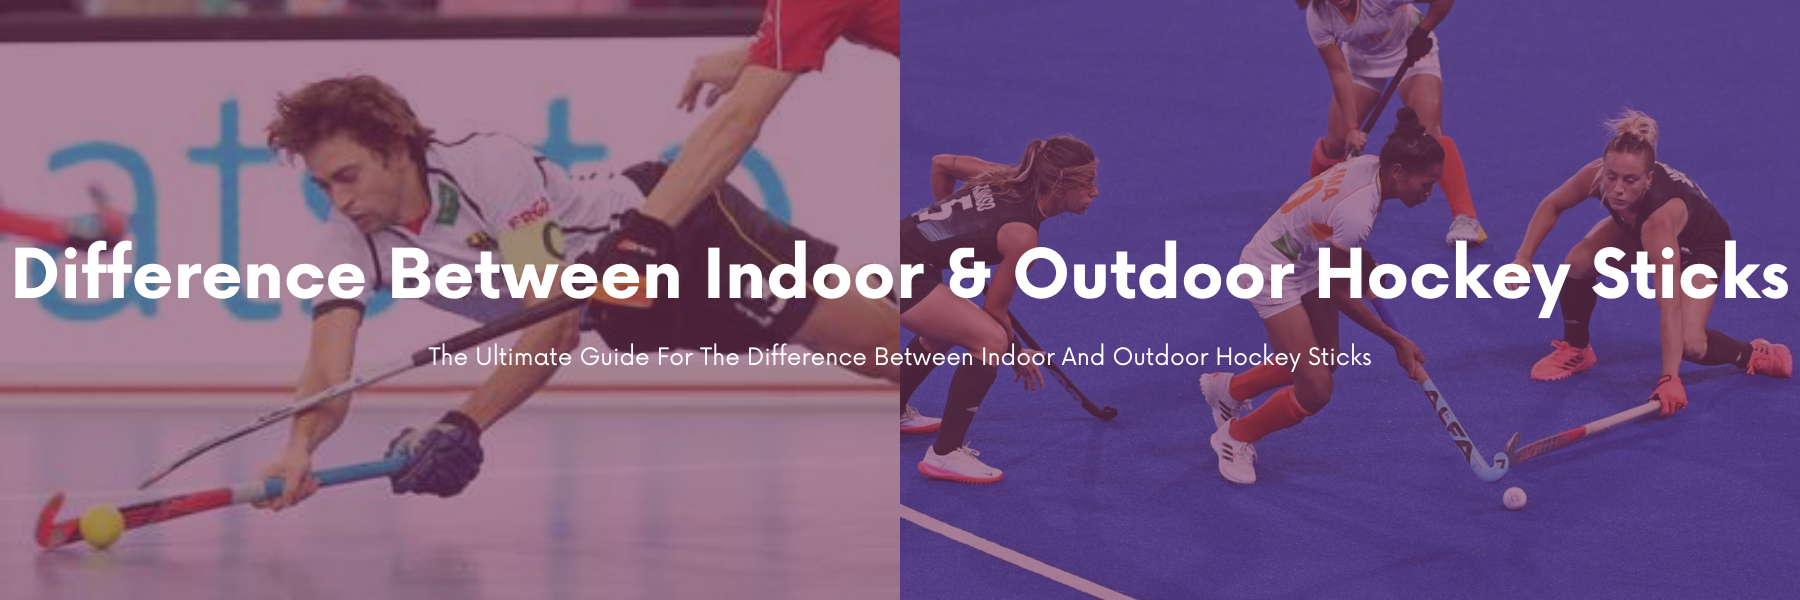 Difference Between Indoor And Outdoor Hockey Sticks